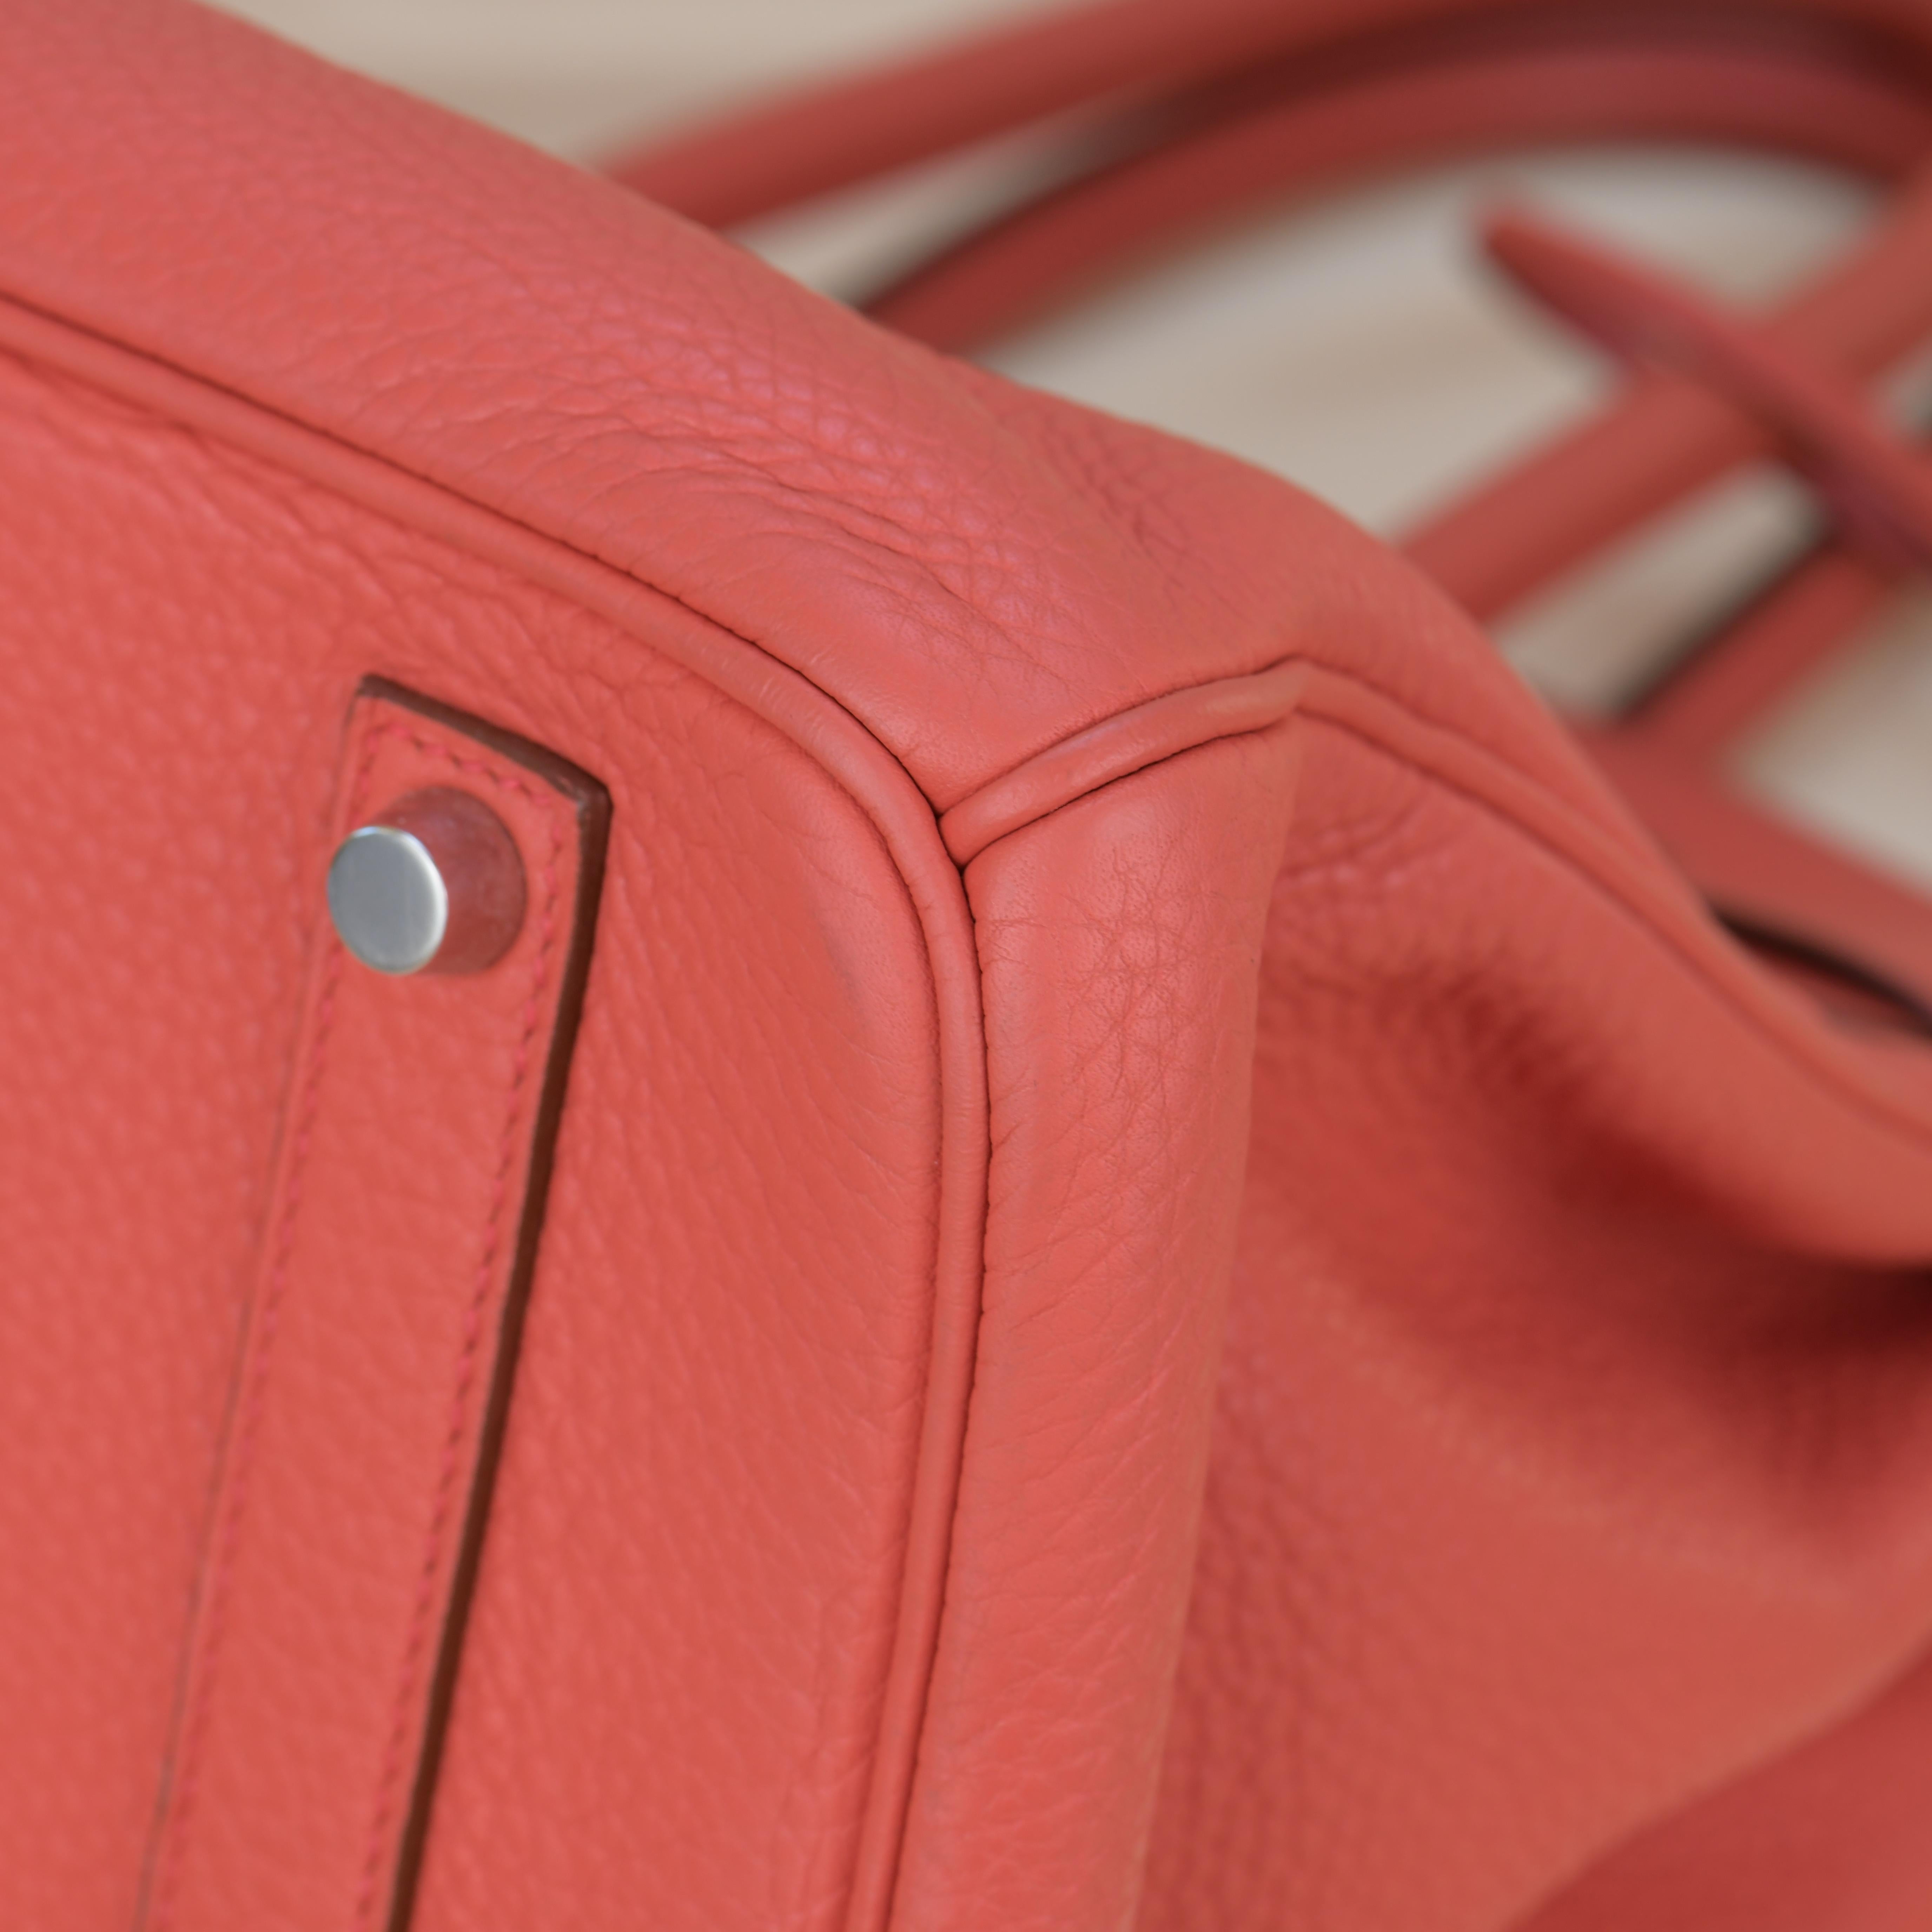 Hermès Rose Jaipur Togo Leather Birkin 35cm with Palladium Hardware 8